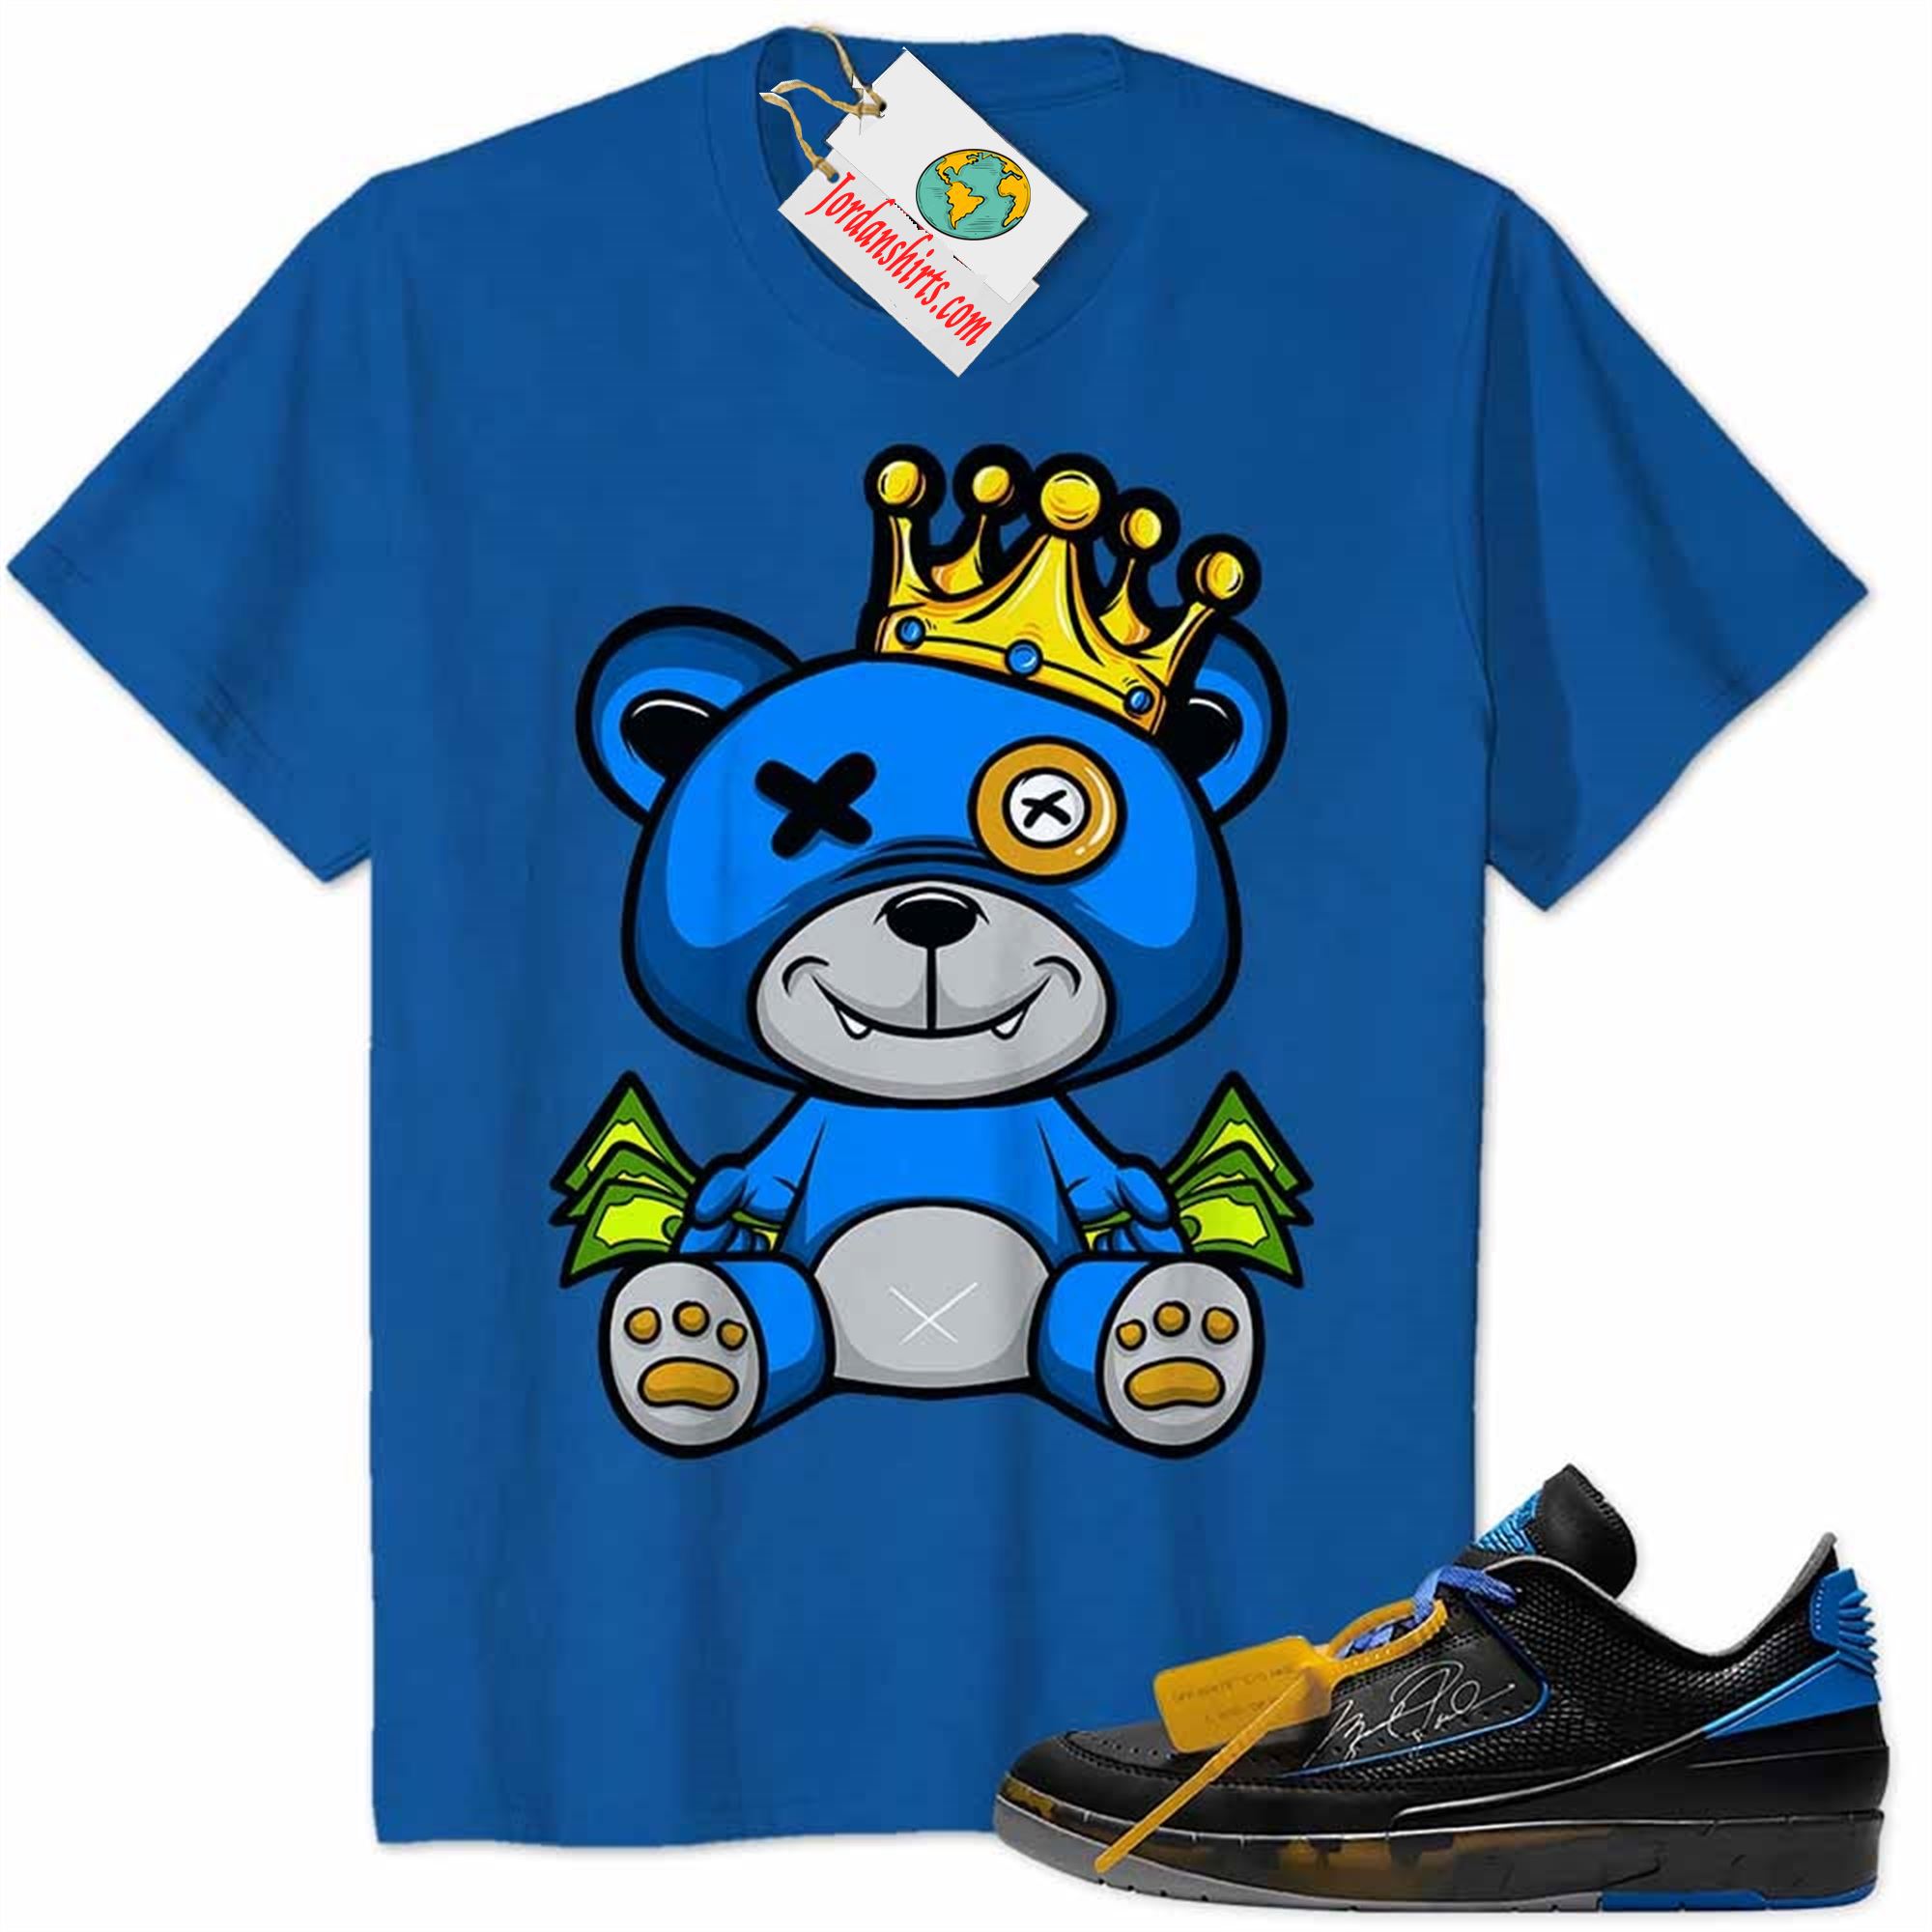 Jordan 2 Shirt, King Teddy Bear Hold Money Blue Air Jordan 2 Low X Off-white Black And Varsity Royal 2s Size Up To 5xl